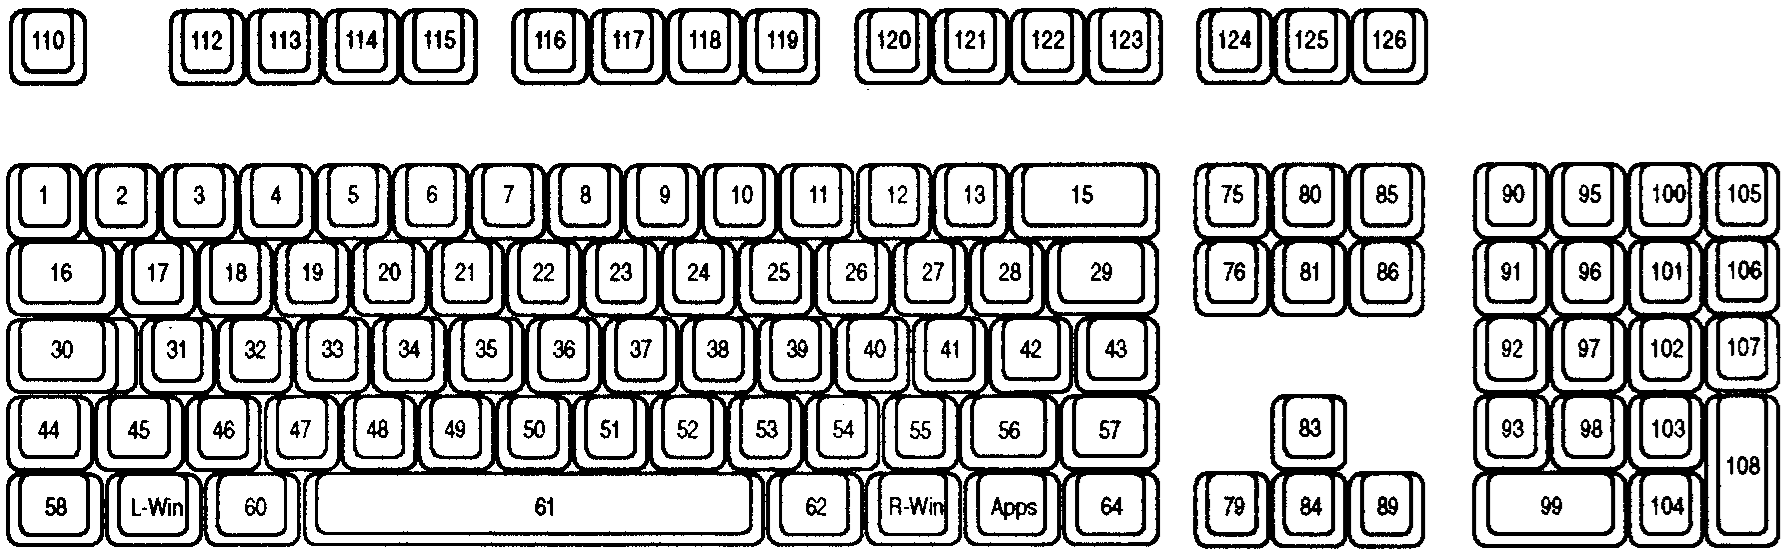 Windows key sequence on a keyboard